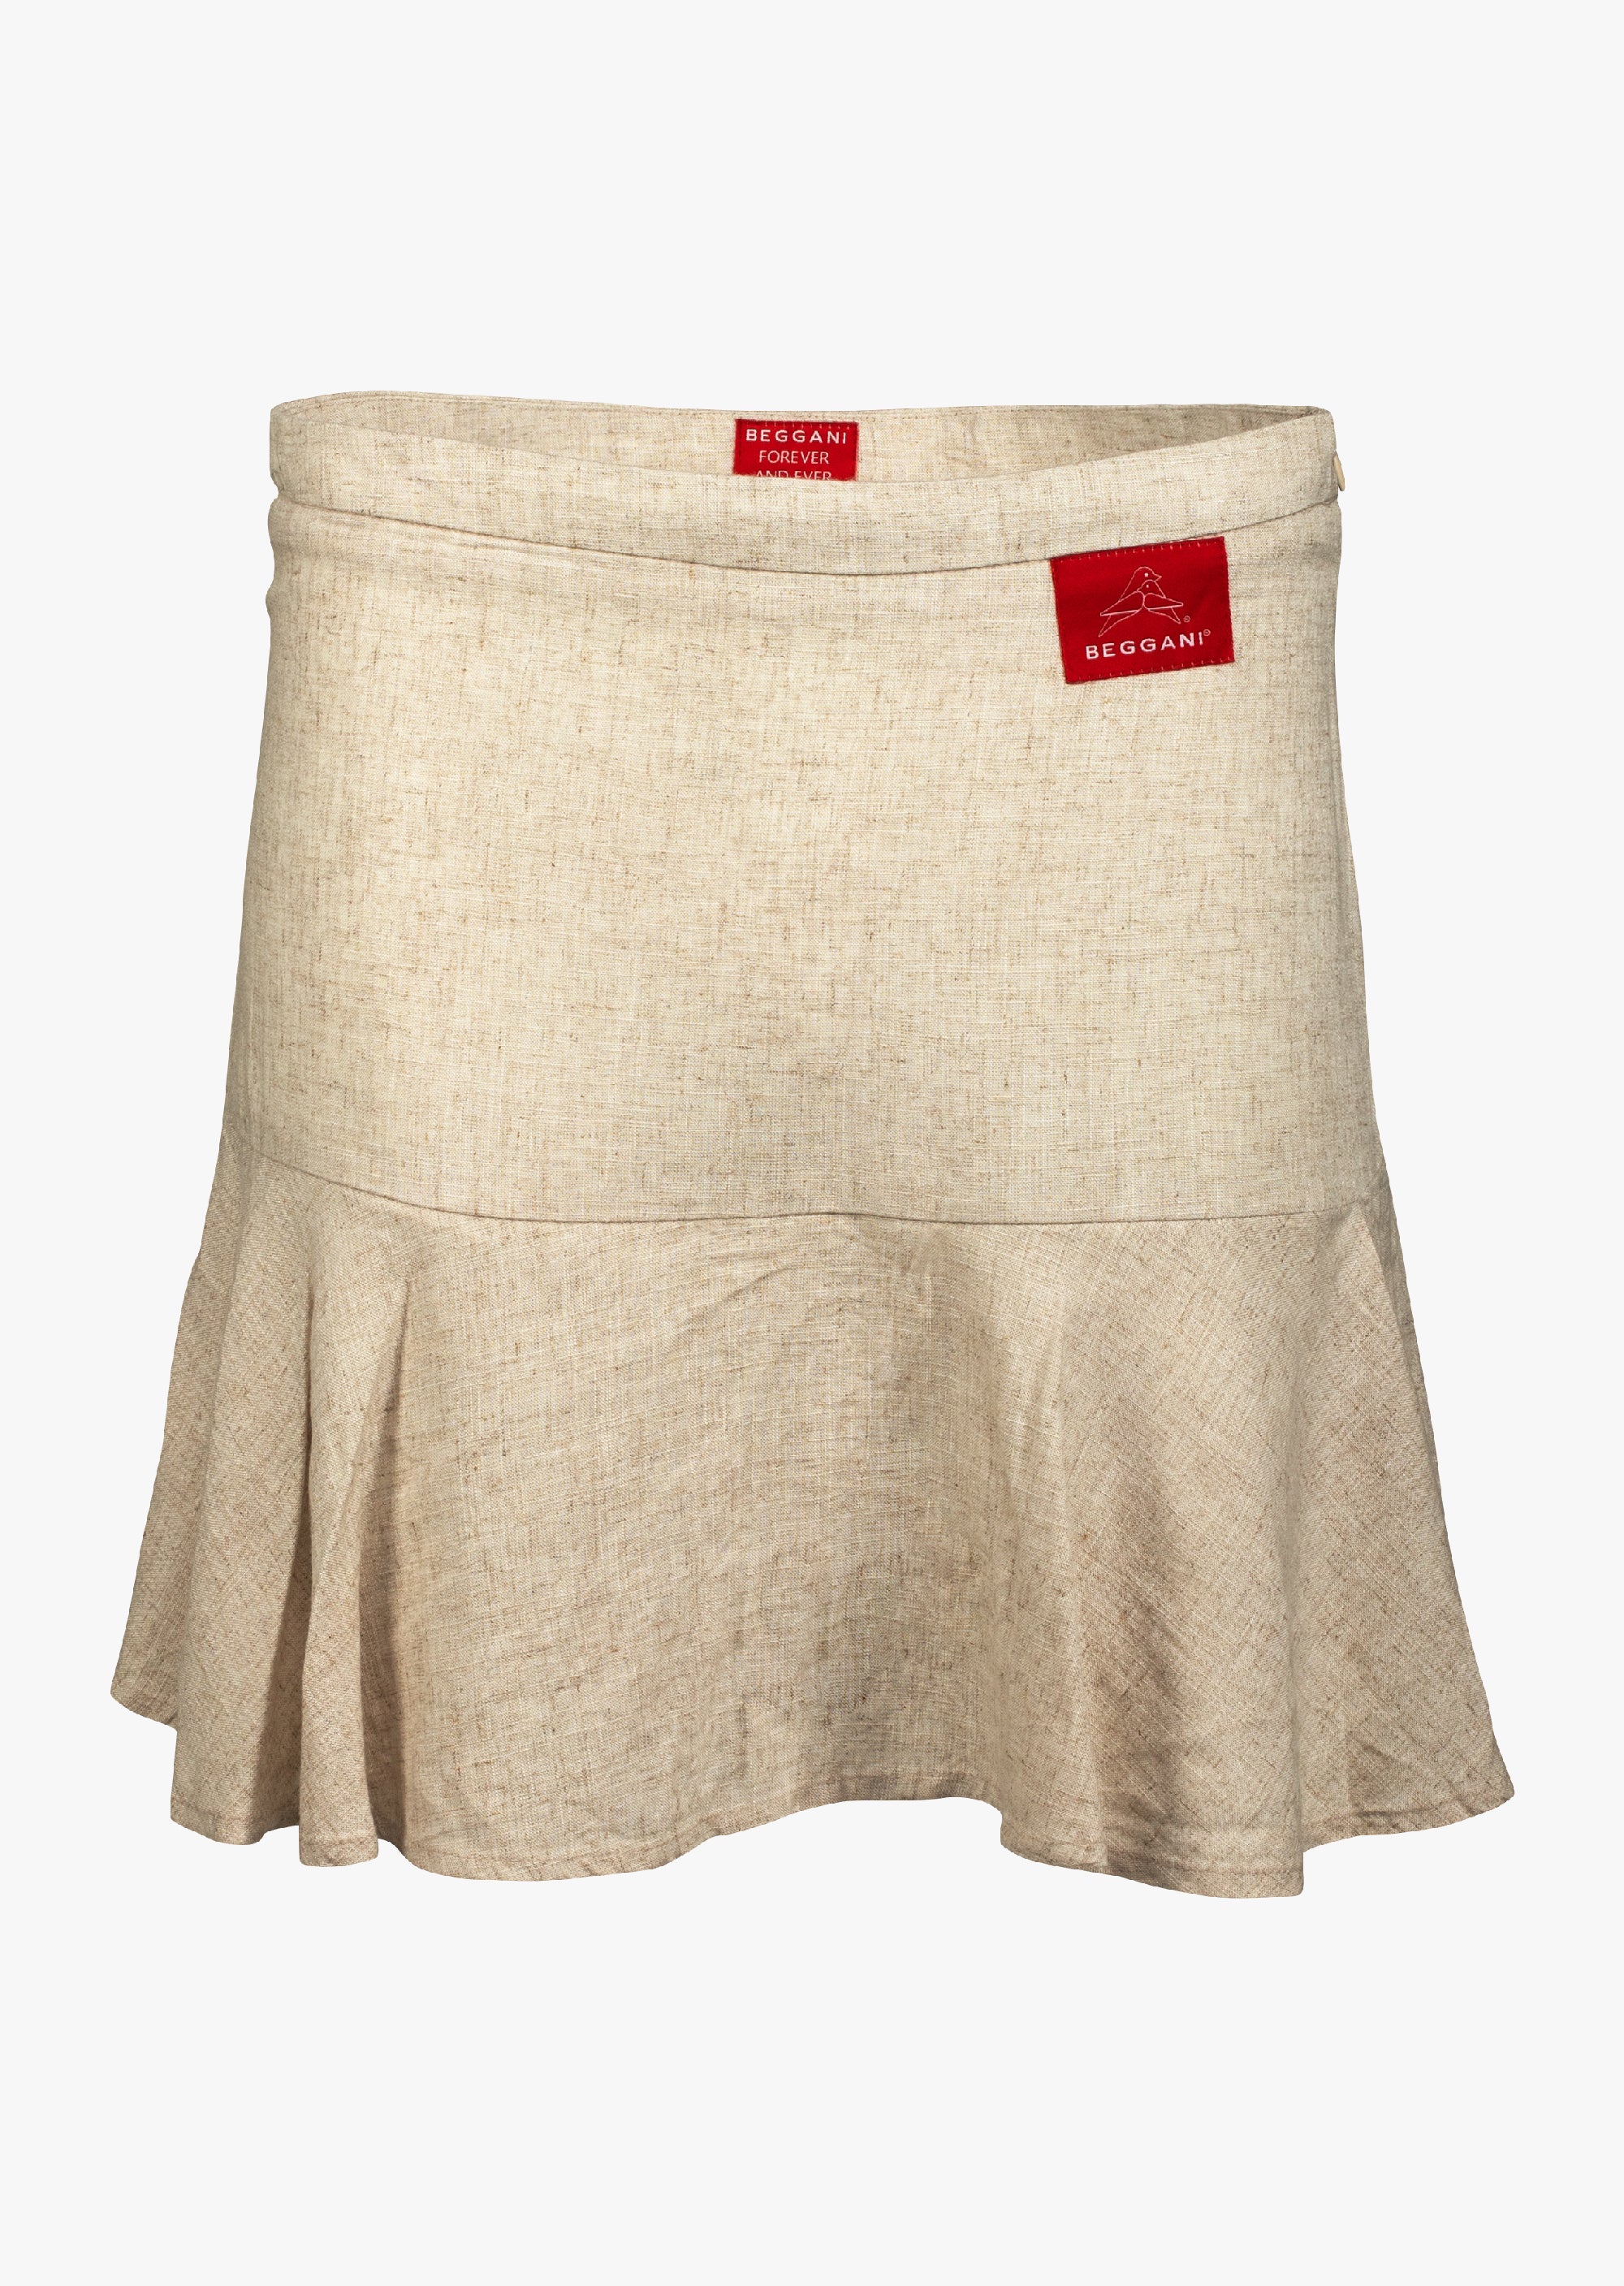 Skirt of soft linen with logo BEGGANI